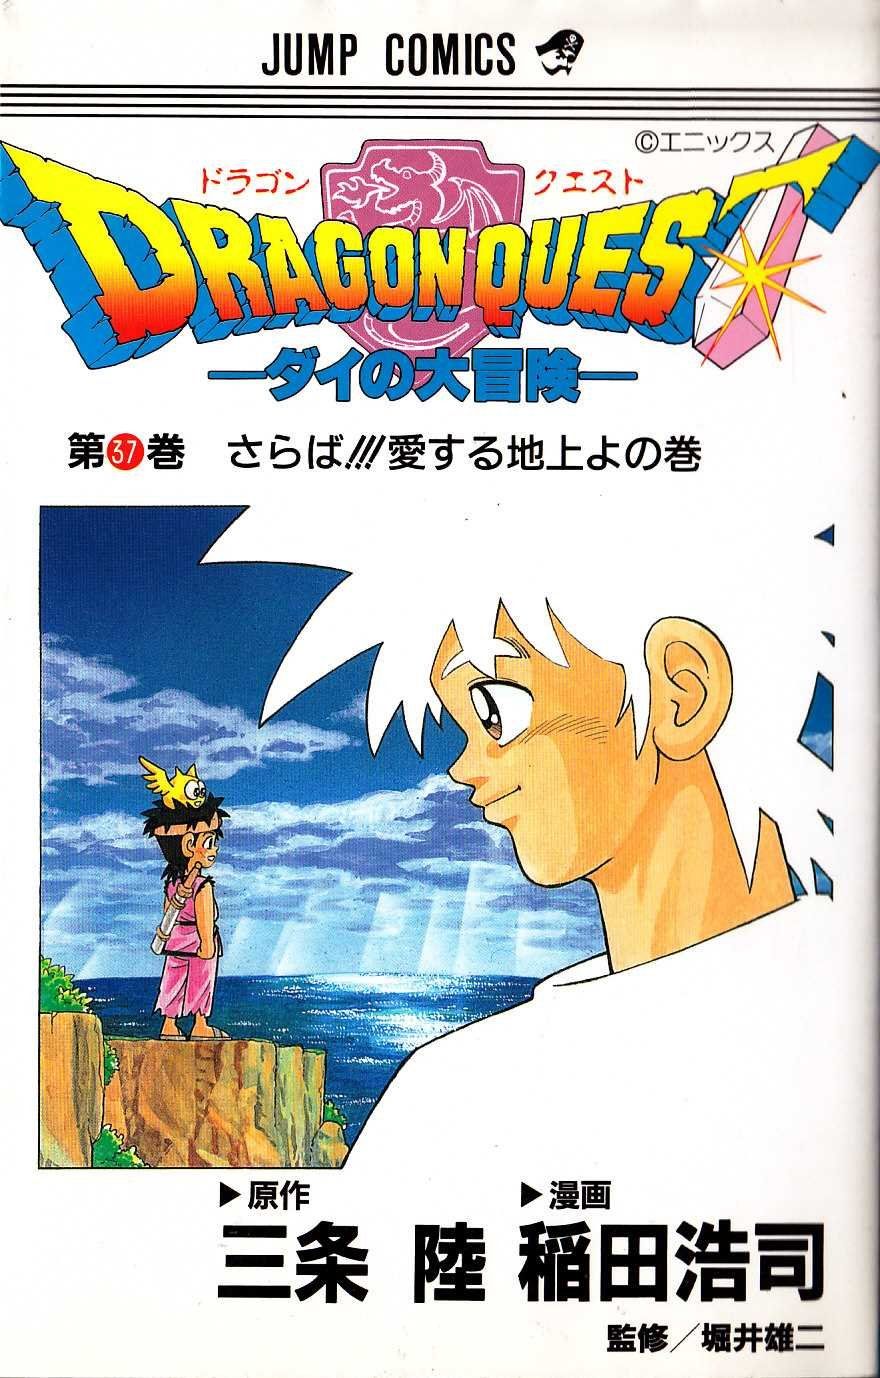 Dragon Quest no Daibouken Vol.37 (June 1997) Quest: Dai no Daibouken (The Adventure of Dai)